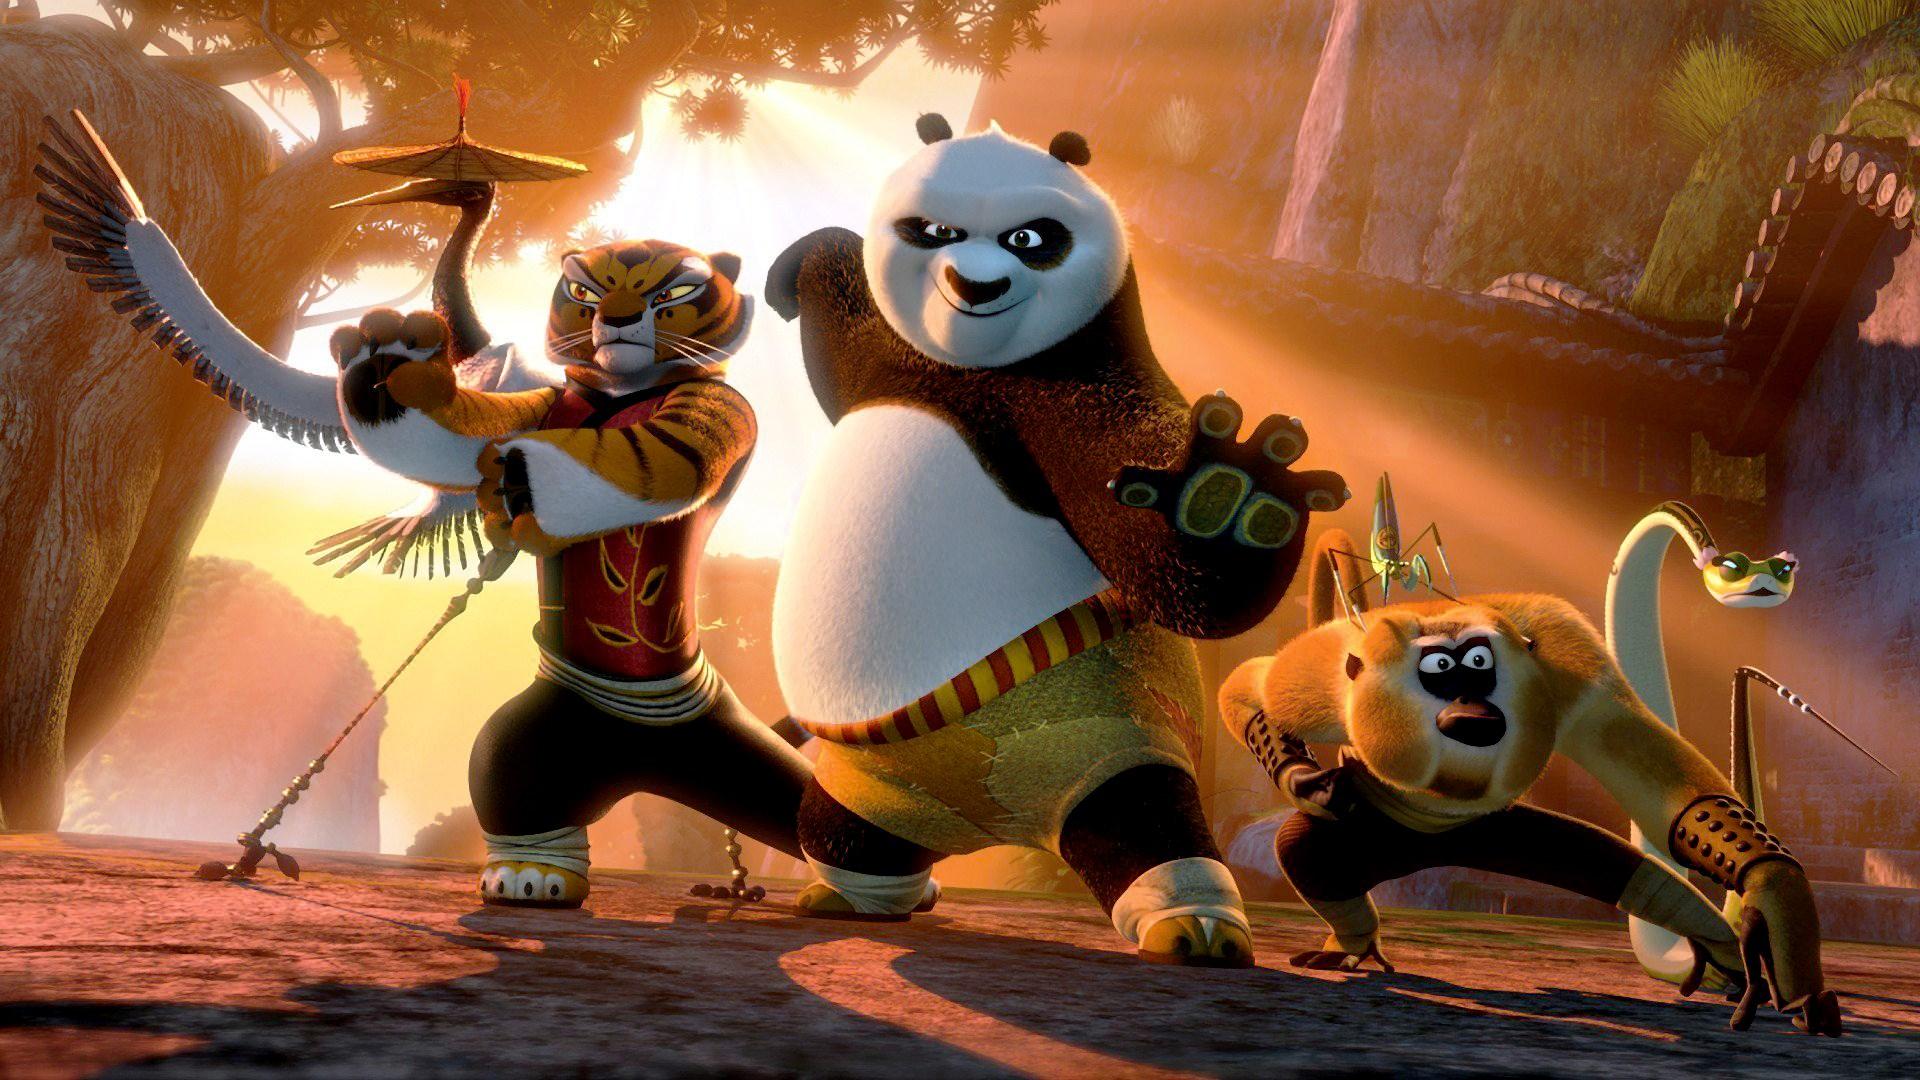 Picture for Desktop: kung fu panda 2. Movie